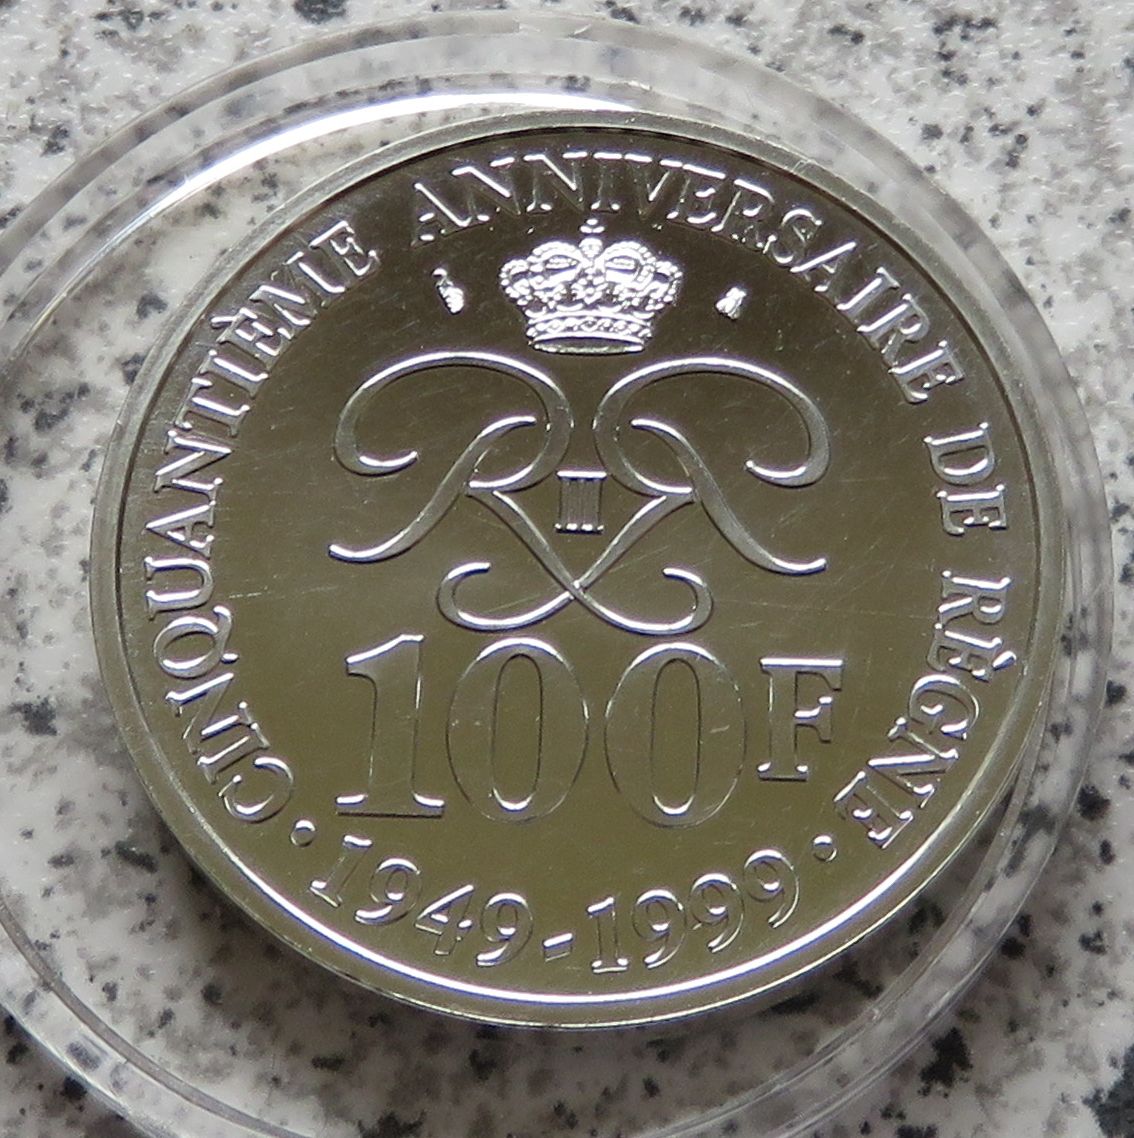  Monaco 100 Francs 1999   